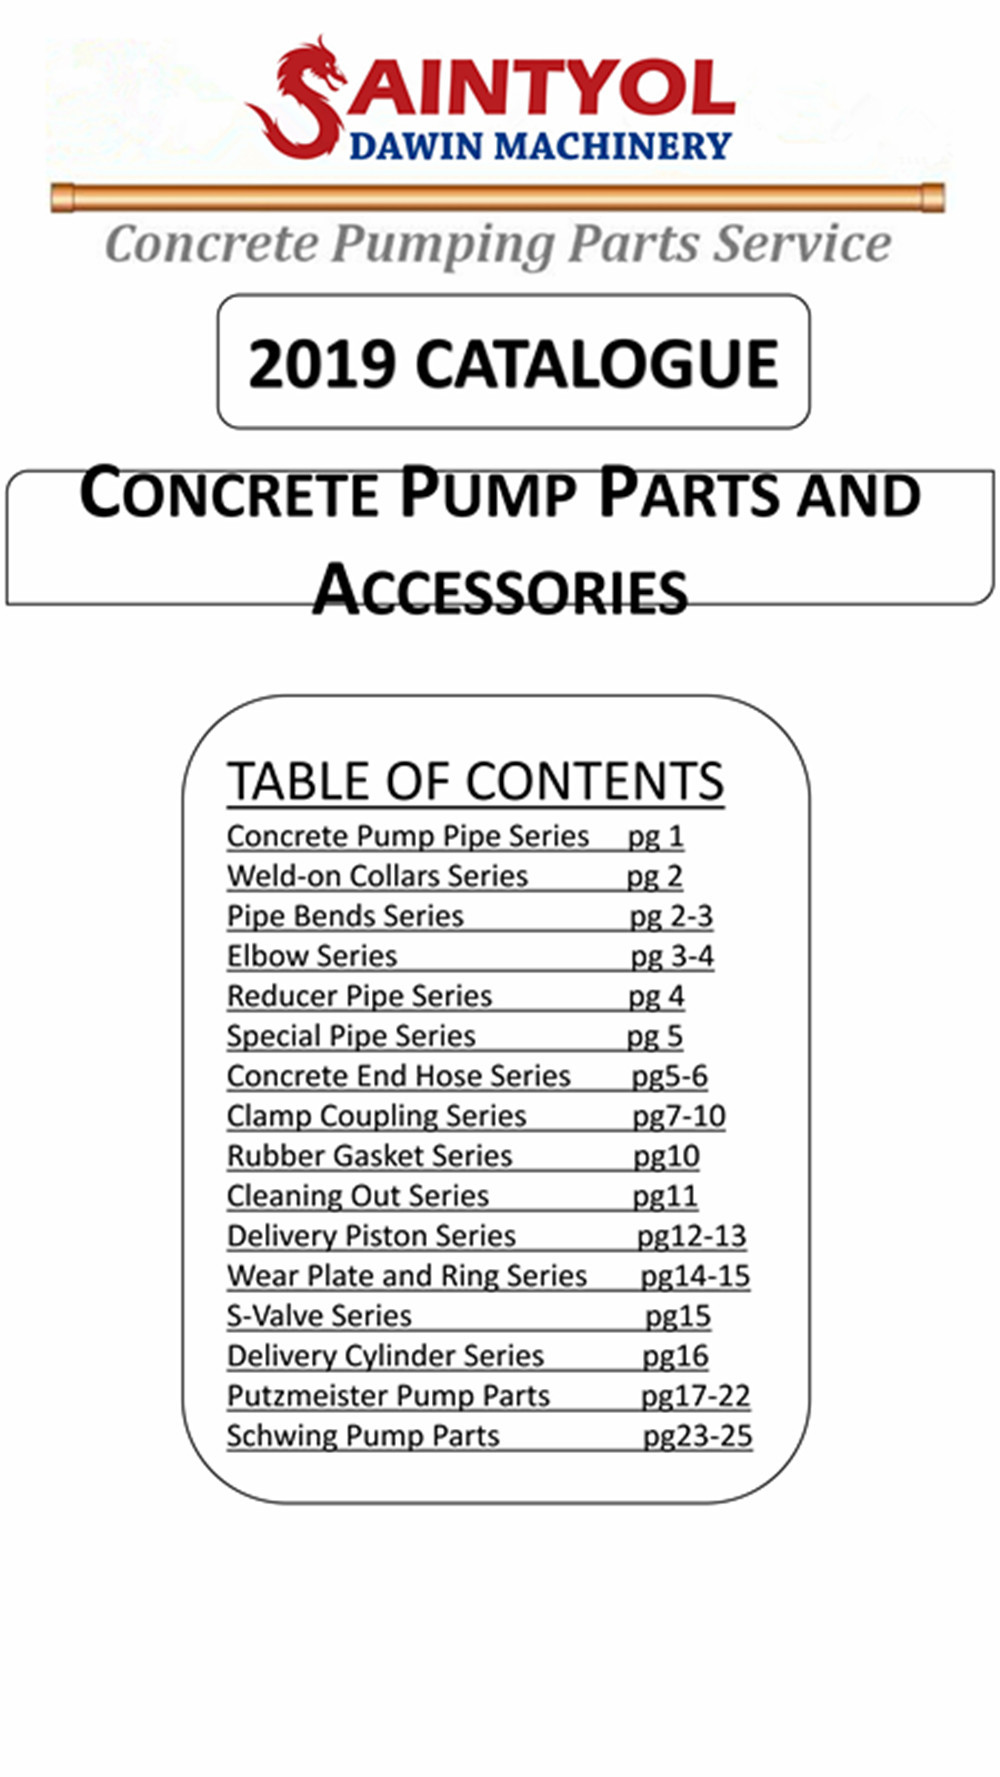 Saintyol DAWIN Concrete Pump Parts & Accessories